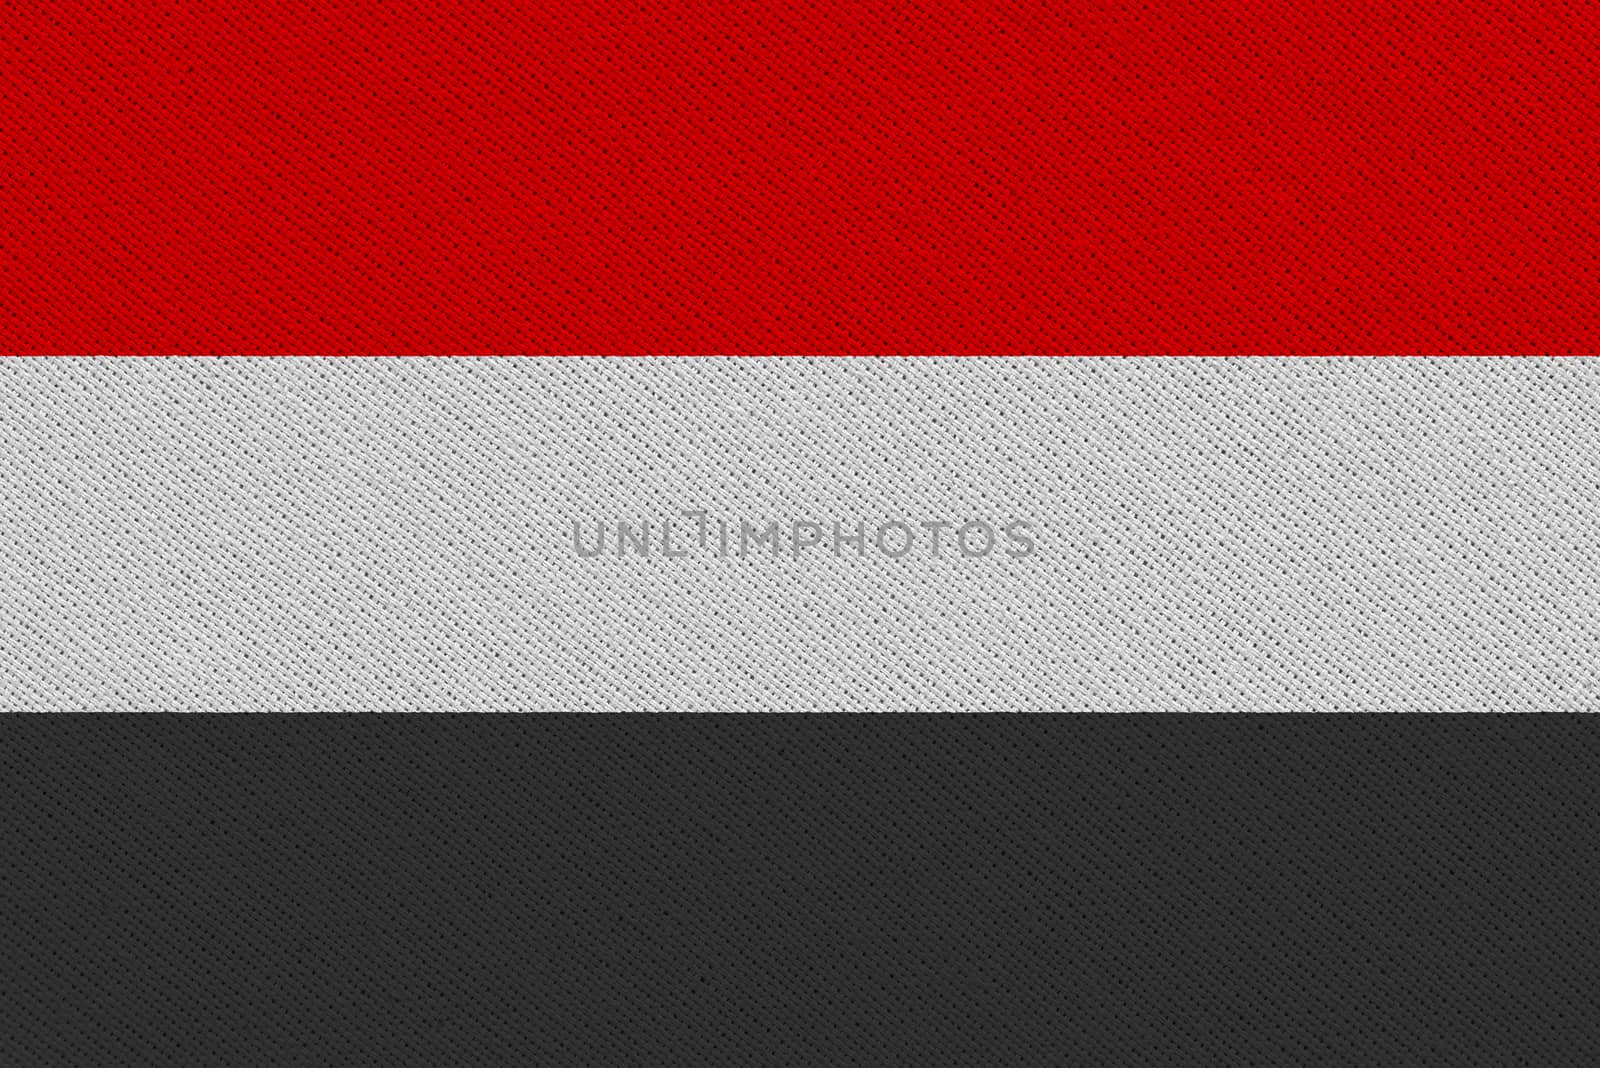 Yemen fabric flag. Patriotic background. National flag of Yemen